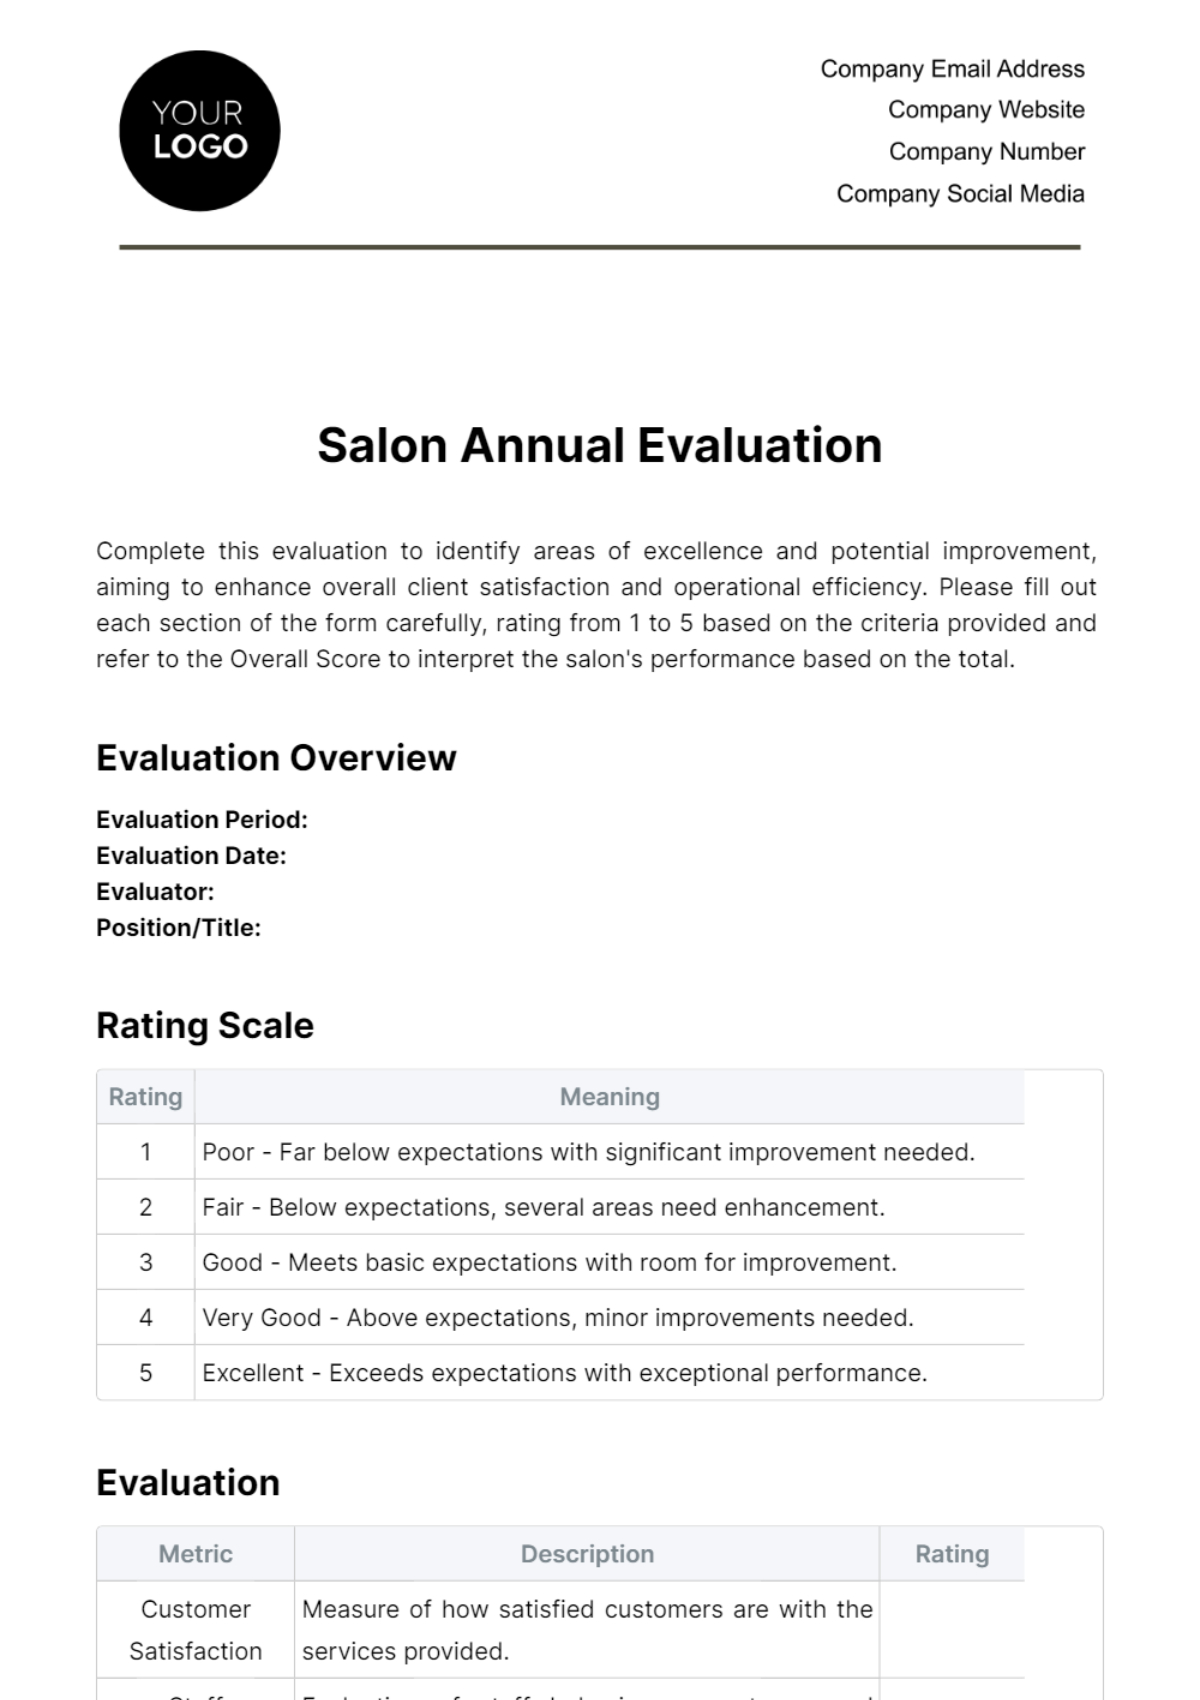 Free Salon Annual Evaluation Template